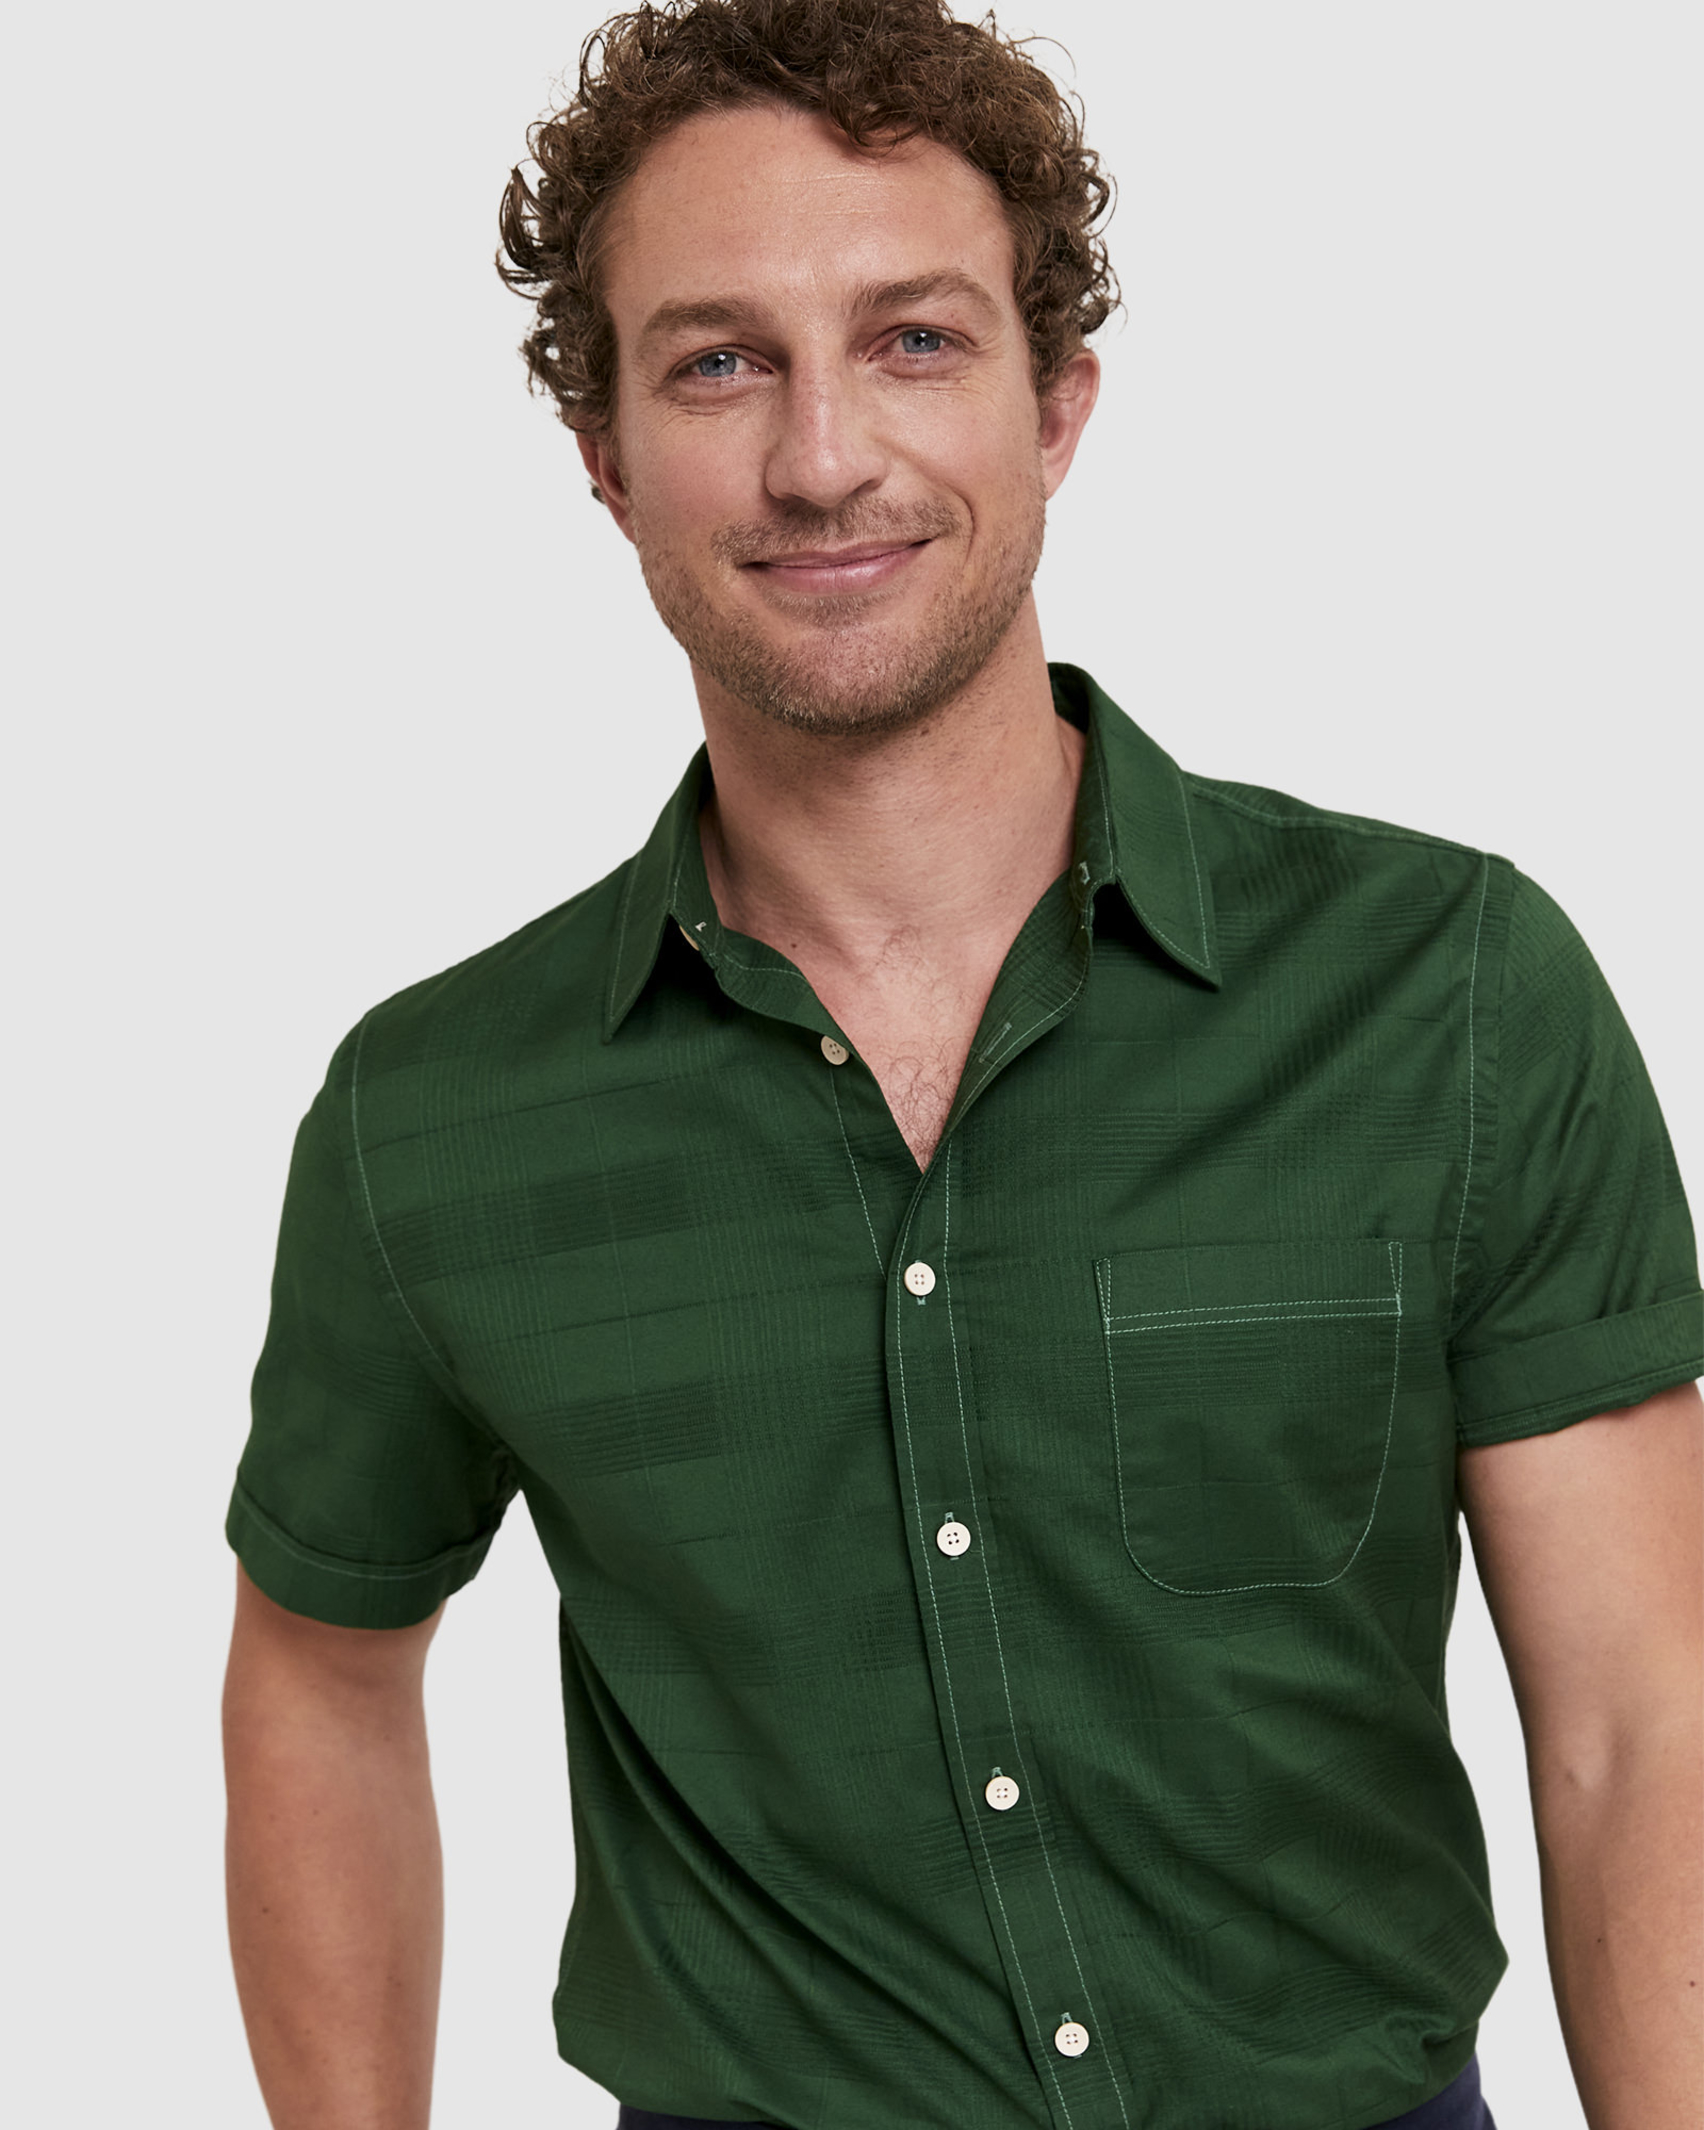 Bains Short Sleeve Shirt in DARK GREEN